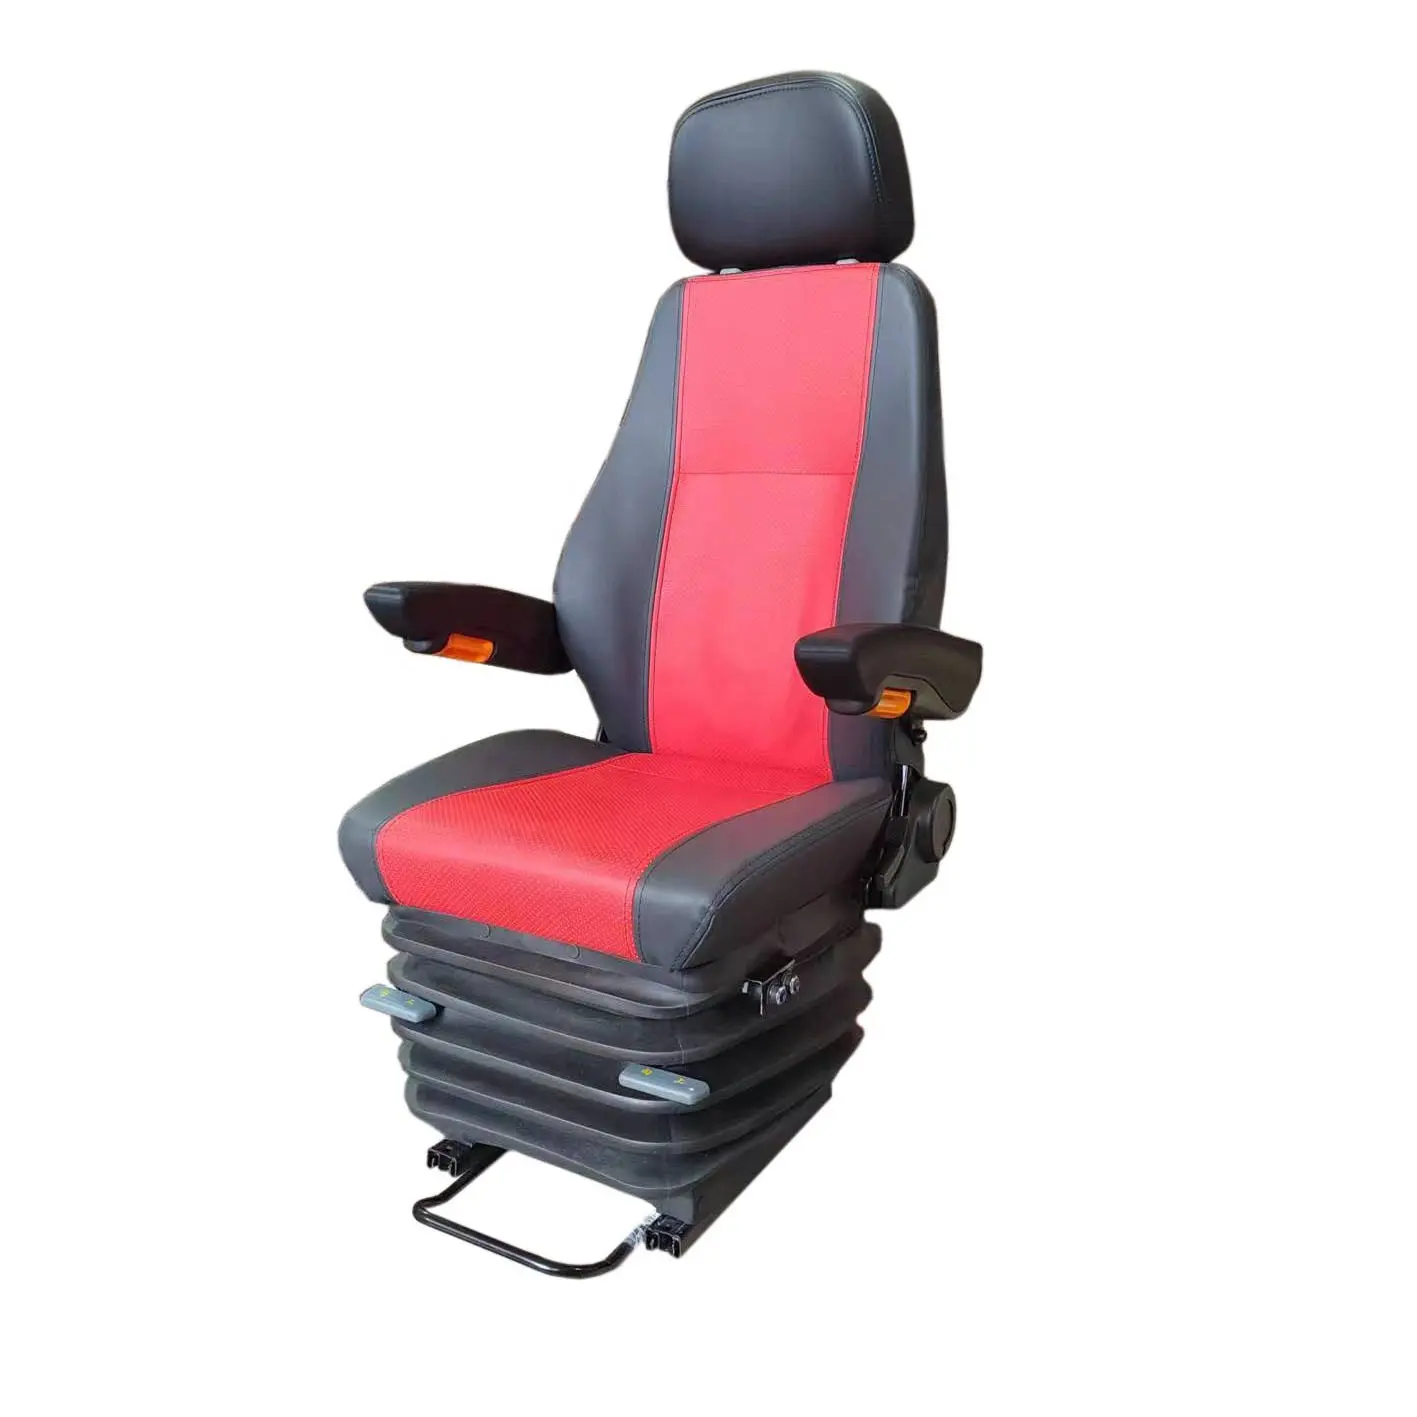 2021 New Mpv Leather Seats Customized Auto Seats For Modification Vehicle